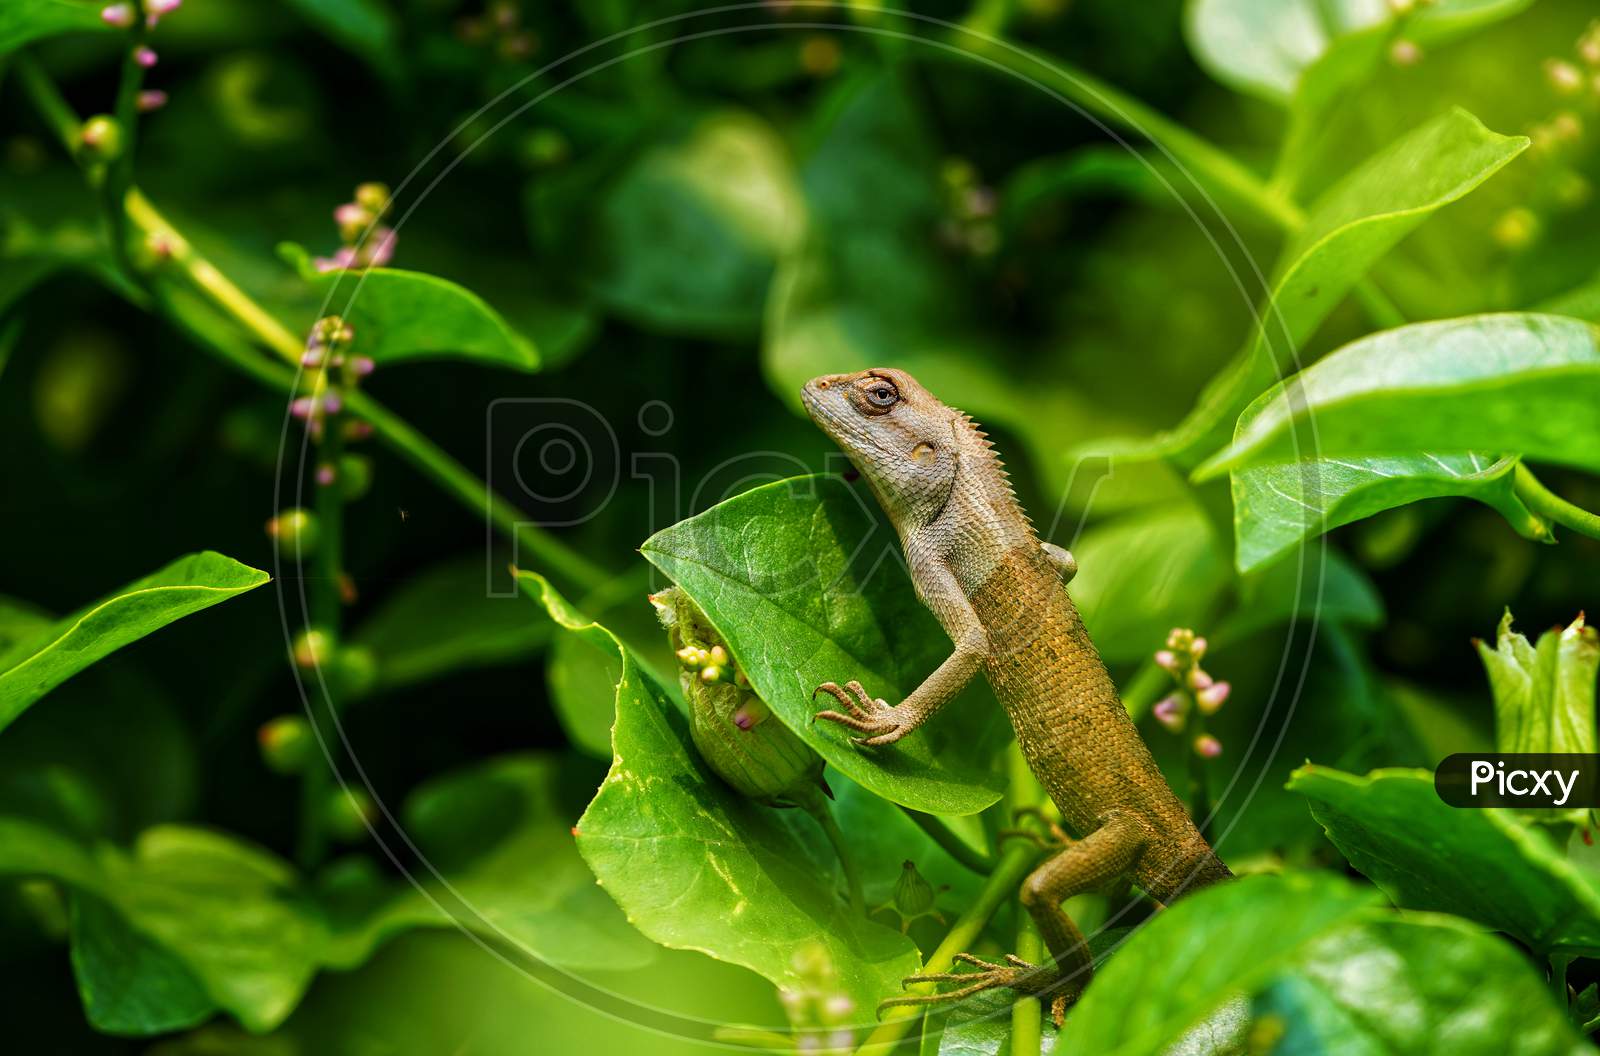 Lizard on green leaves